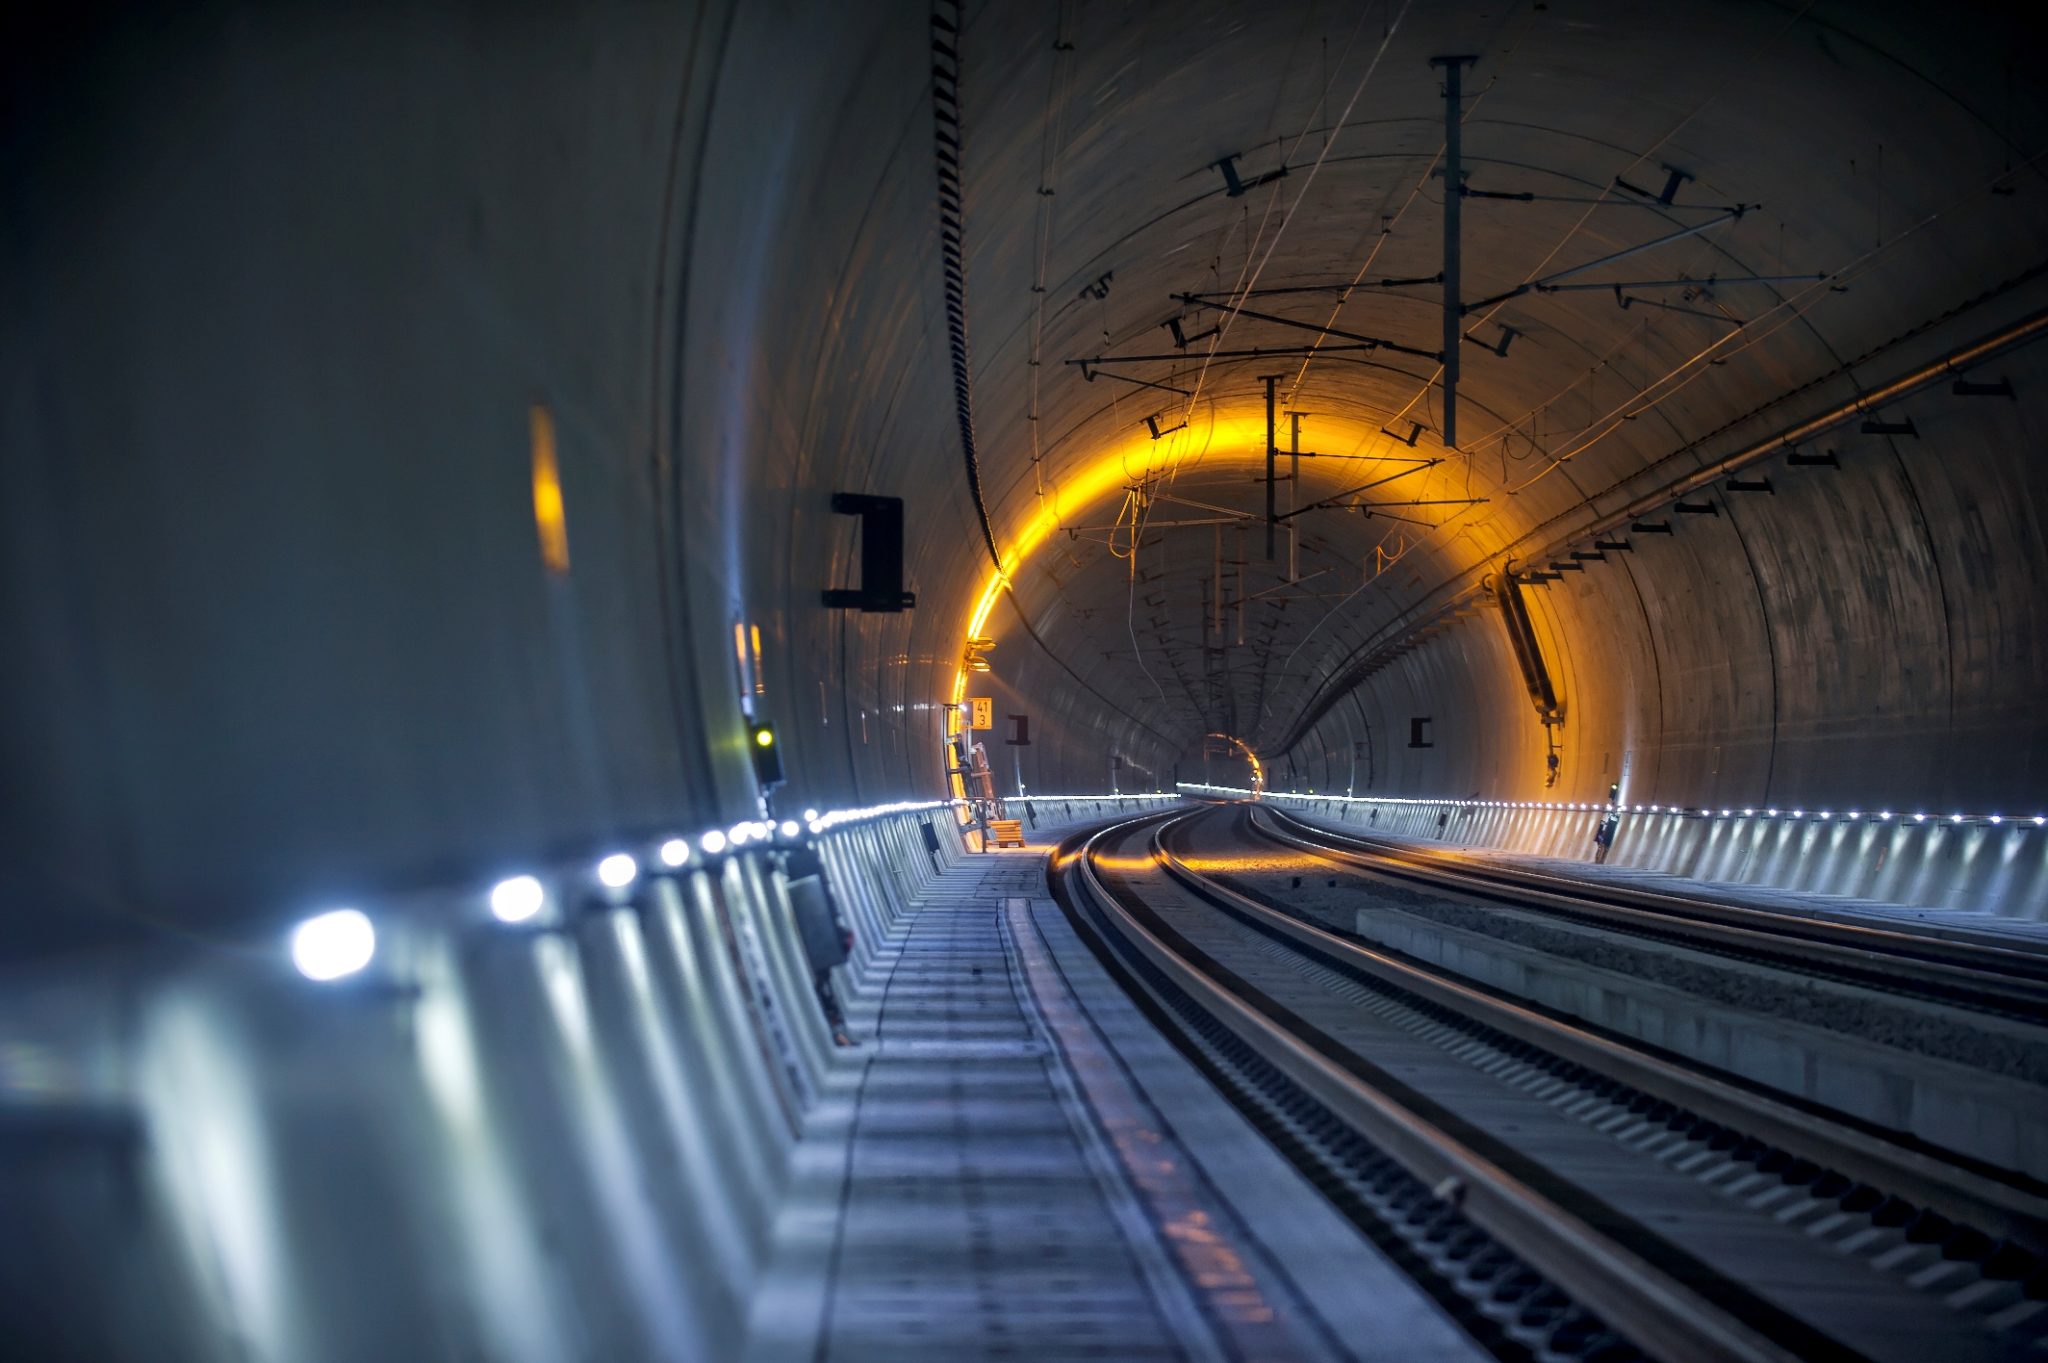 Lower Inn Valley railway tunnel